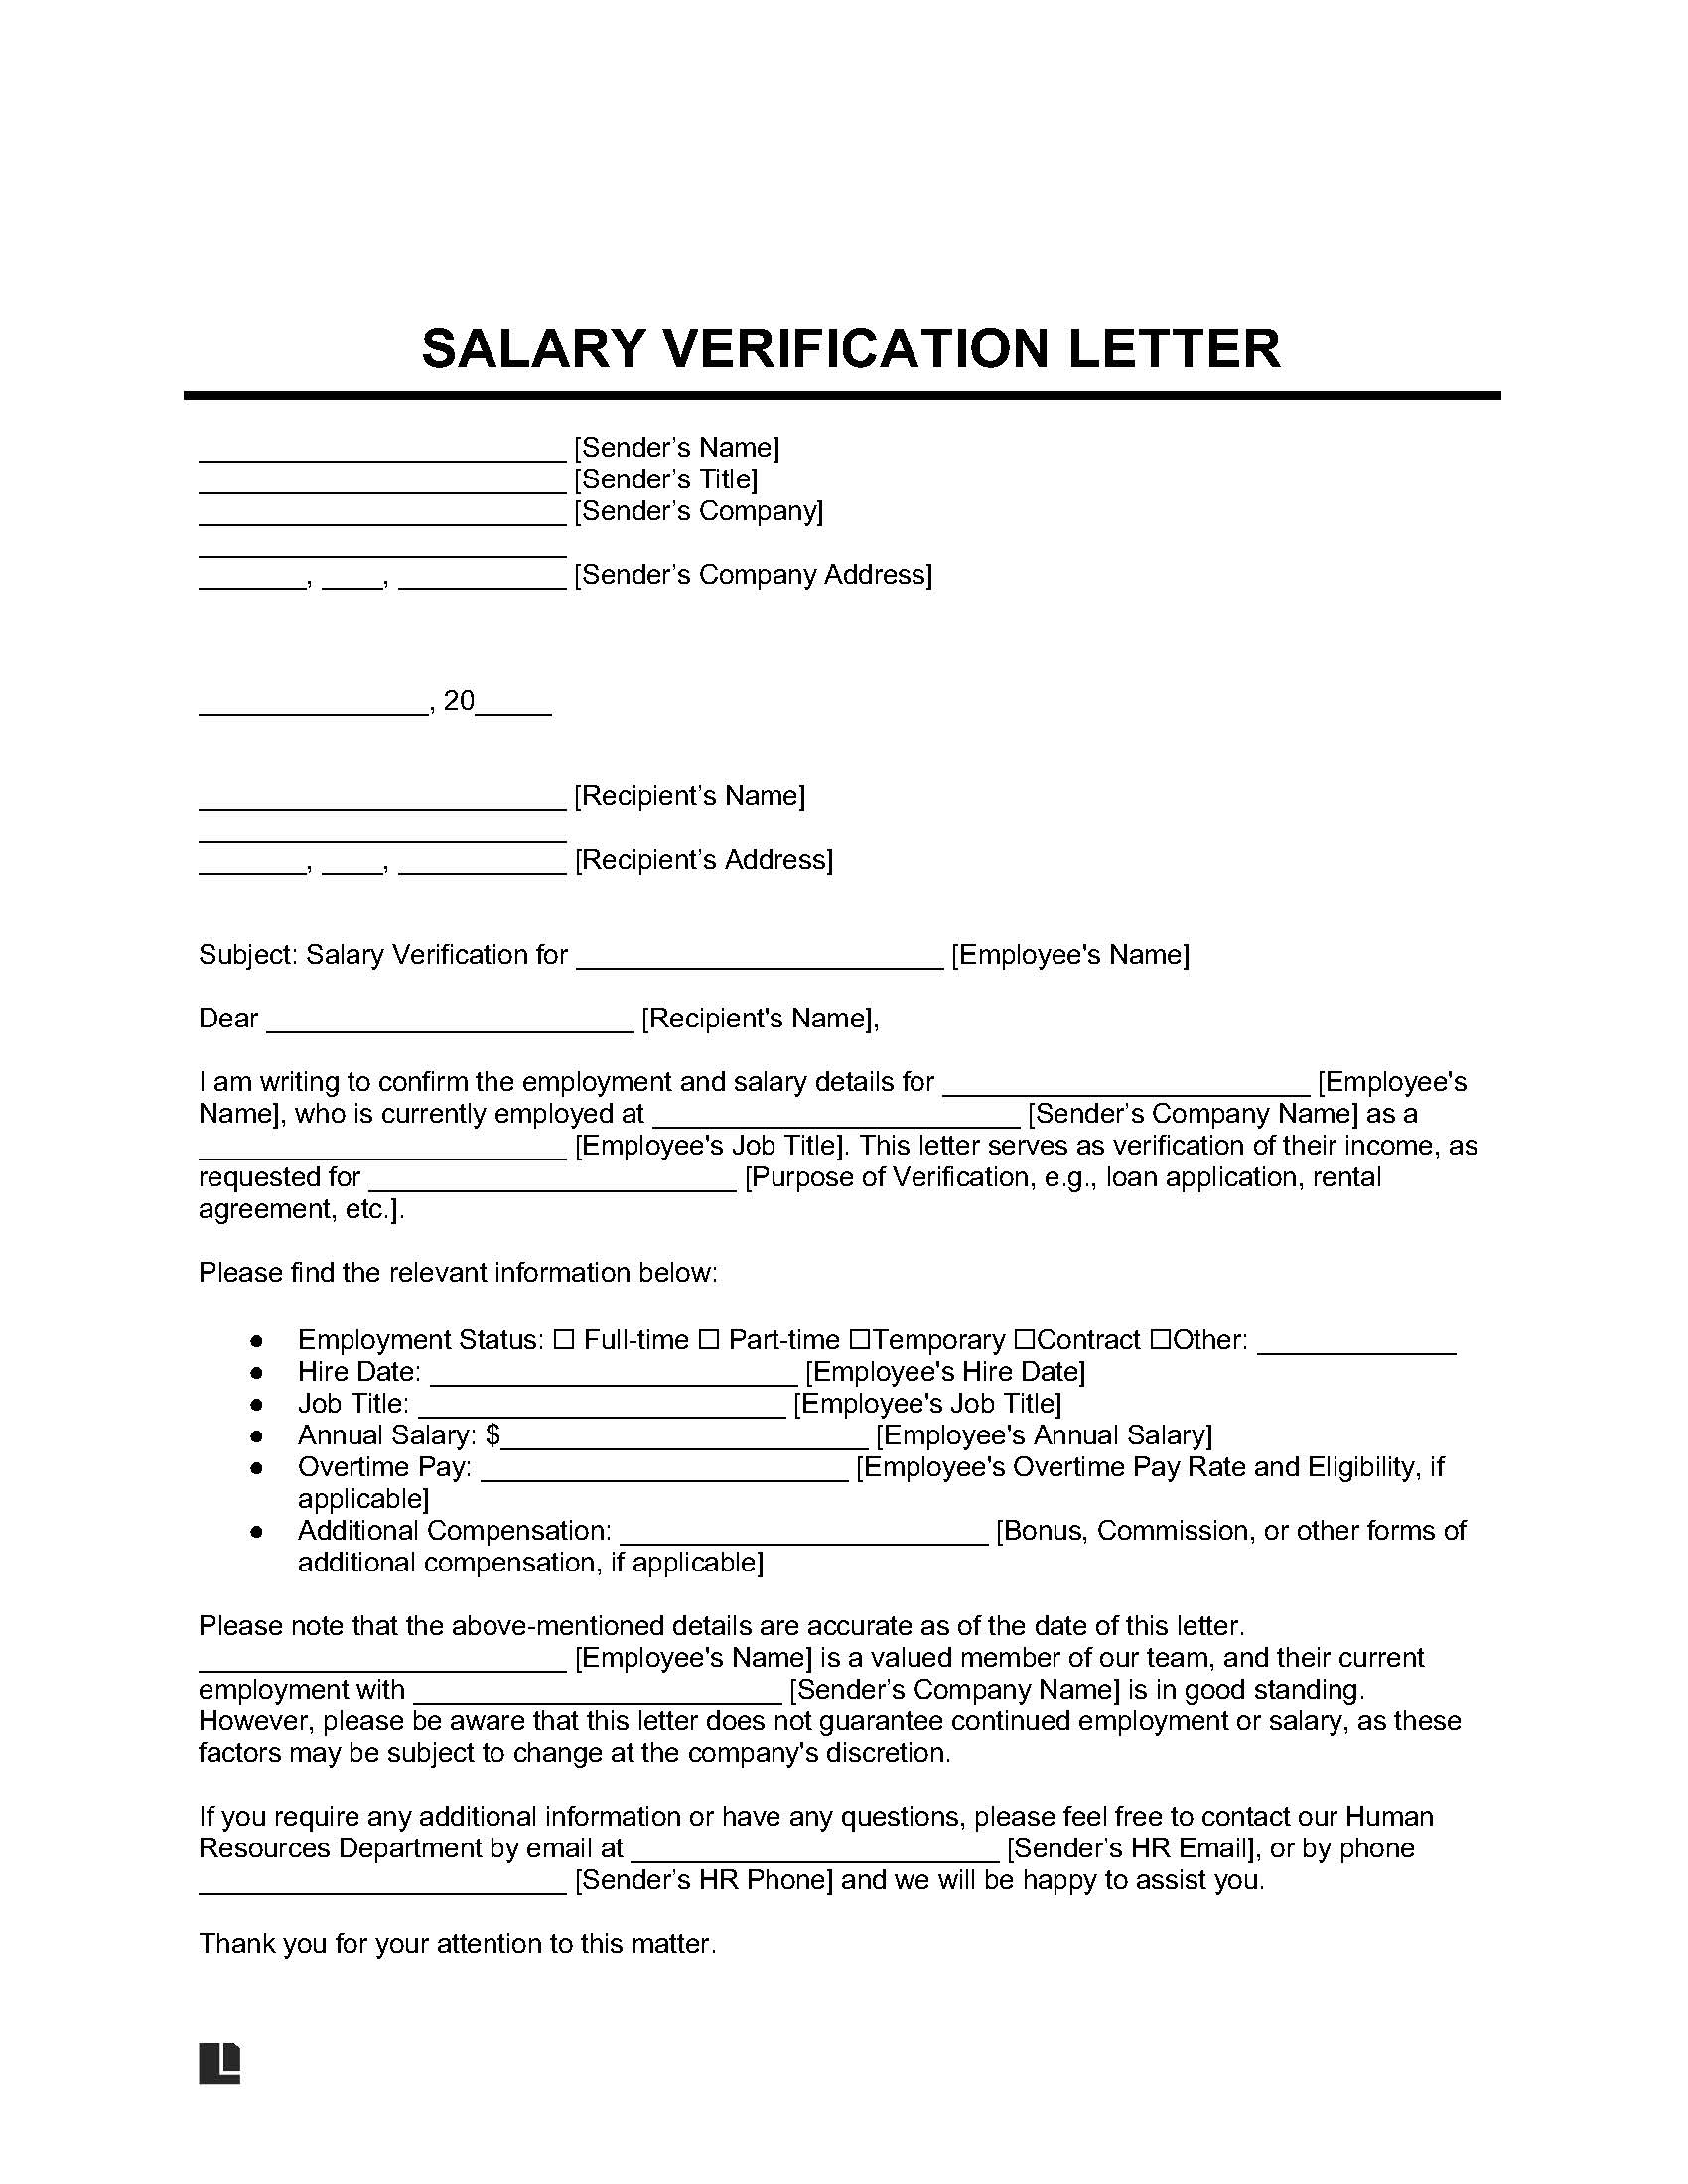 Salary Verification Letter Template